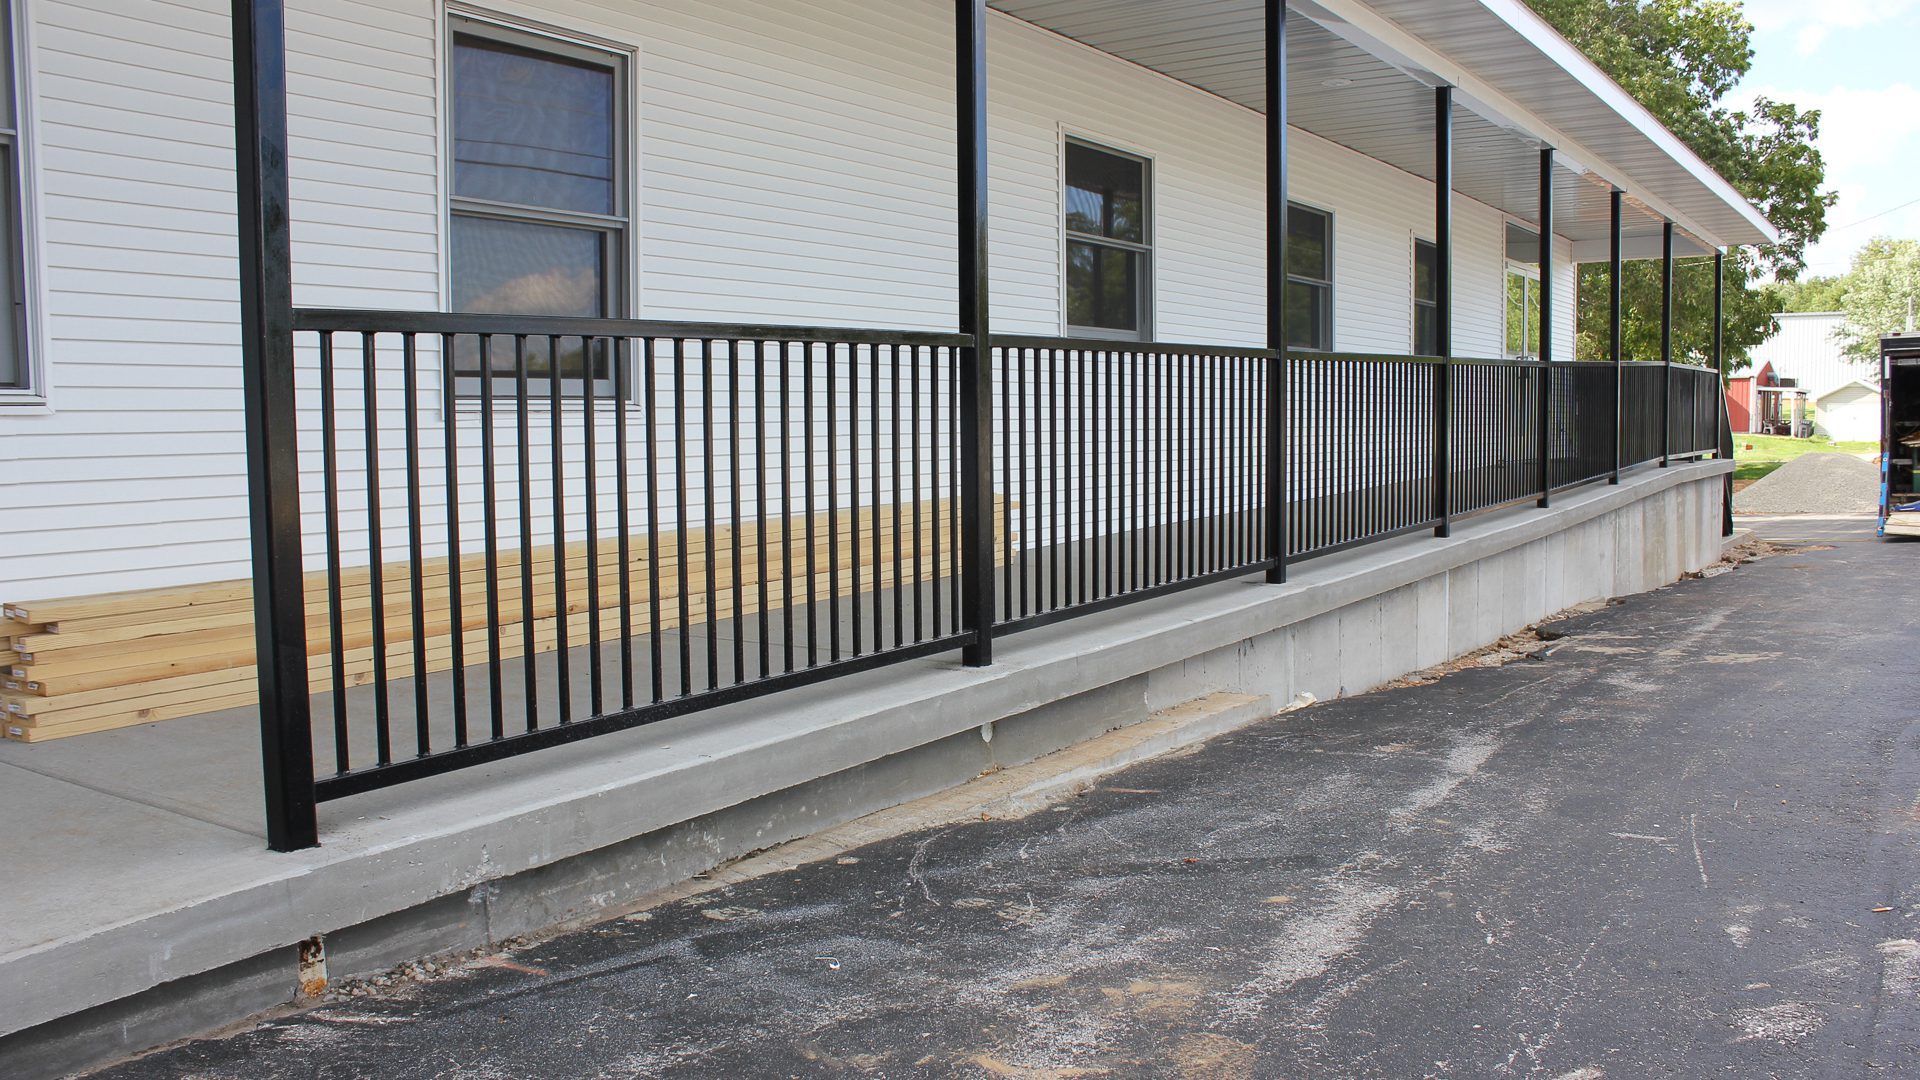 structural steel sidewalk railing